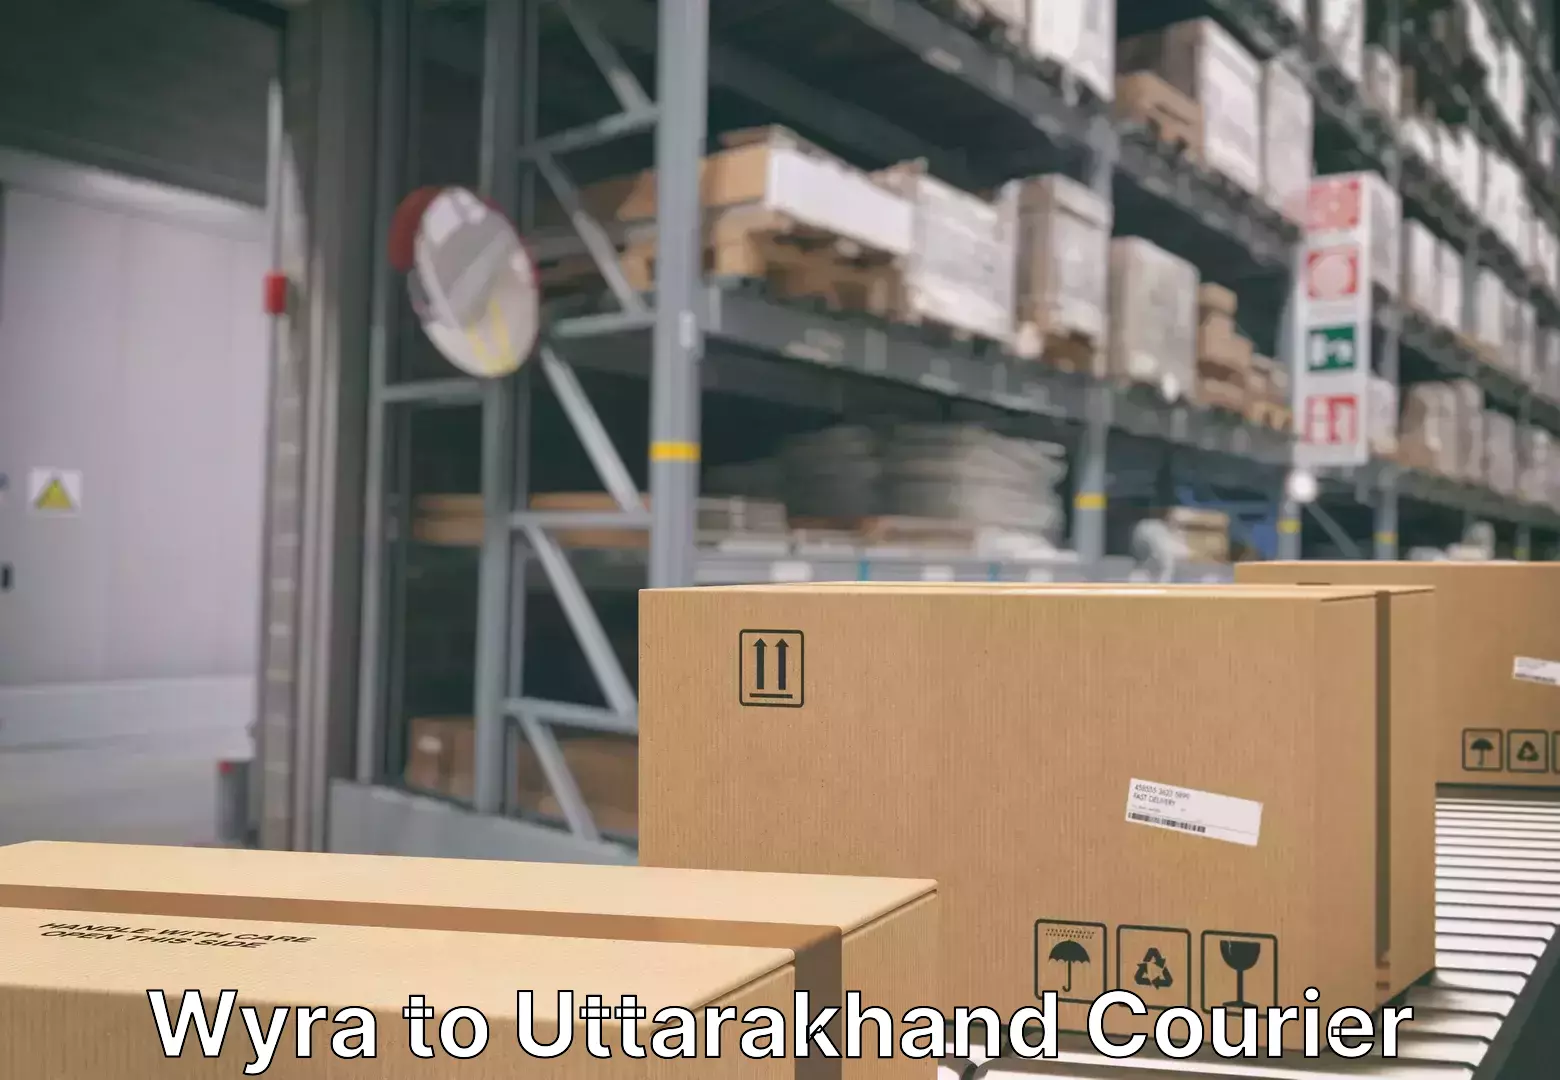 Expert goods movers Wyra to Uttarakhand